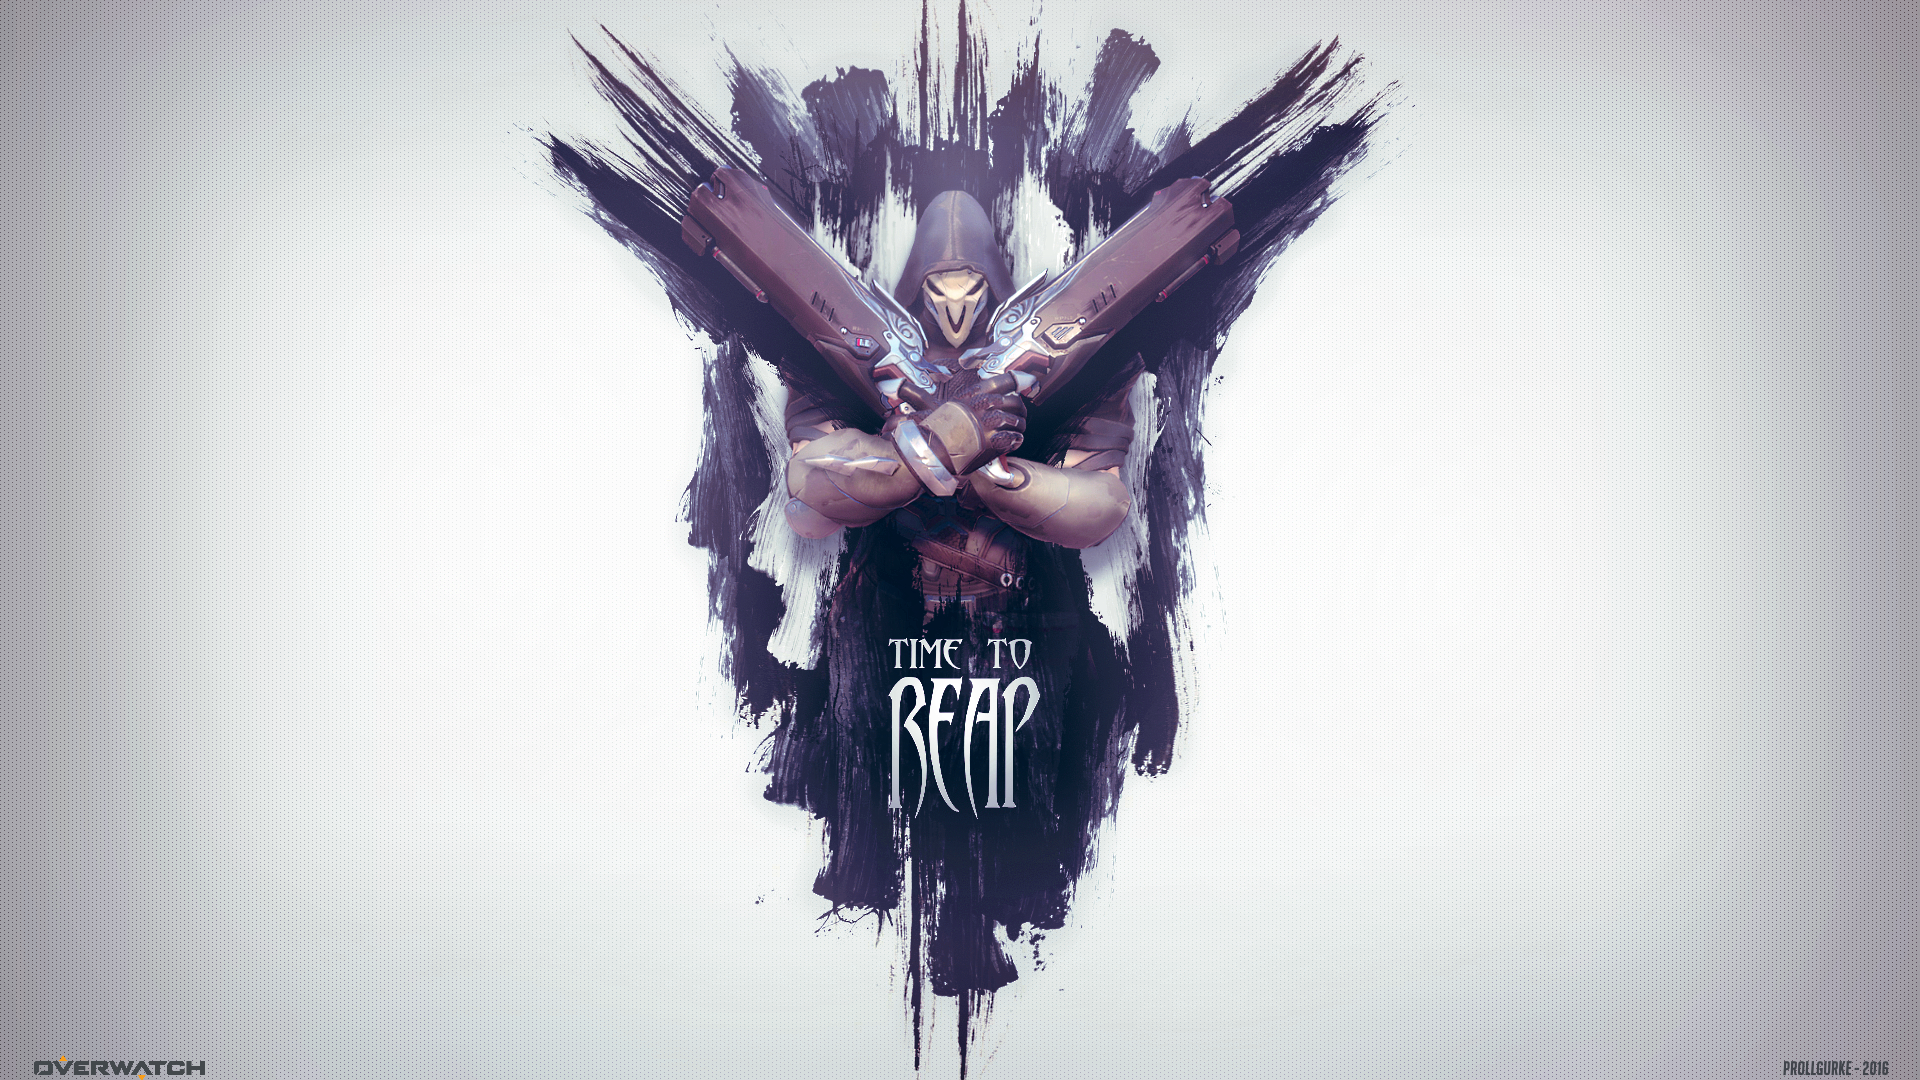 Reaper Overwatch Hd Wallpaper Background Image 19x1080